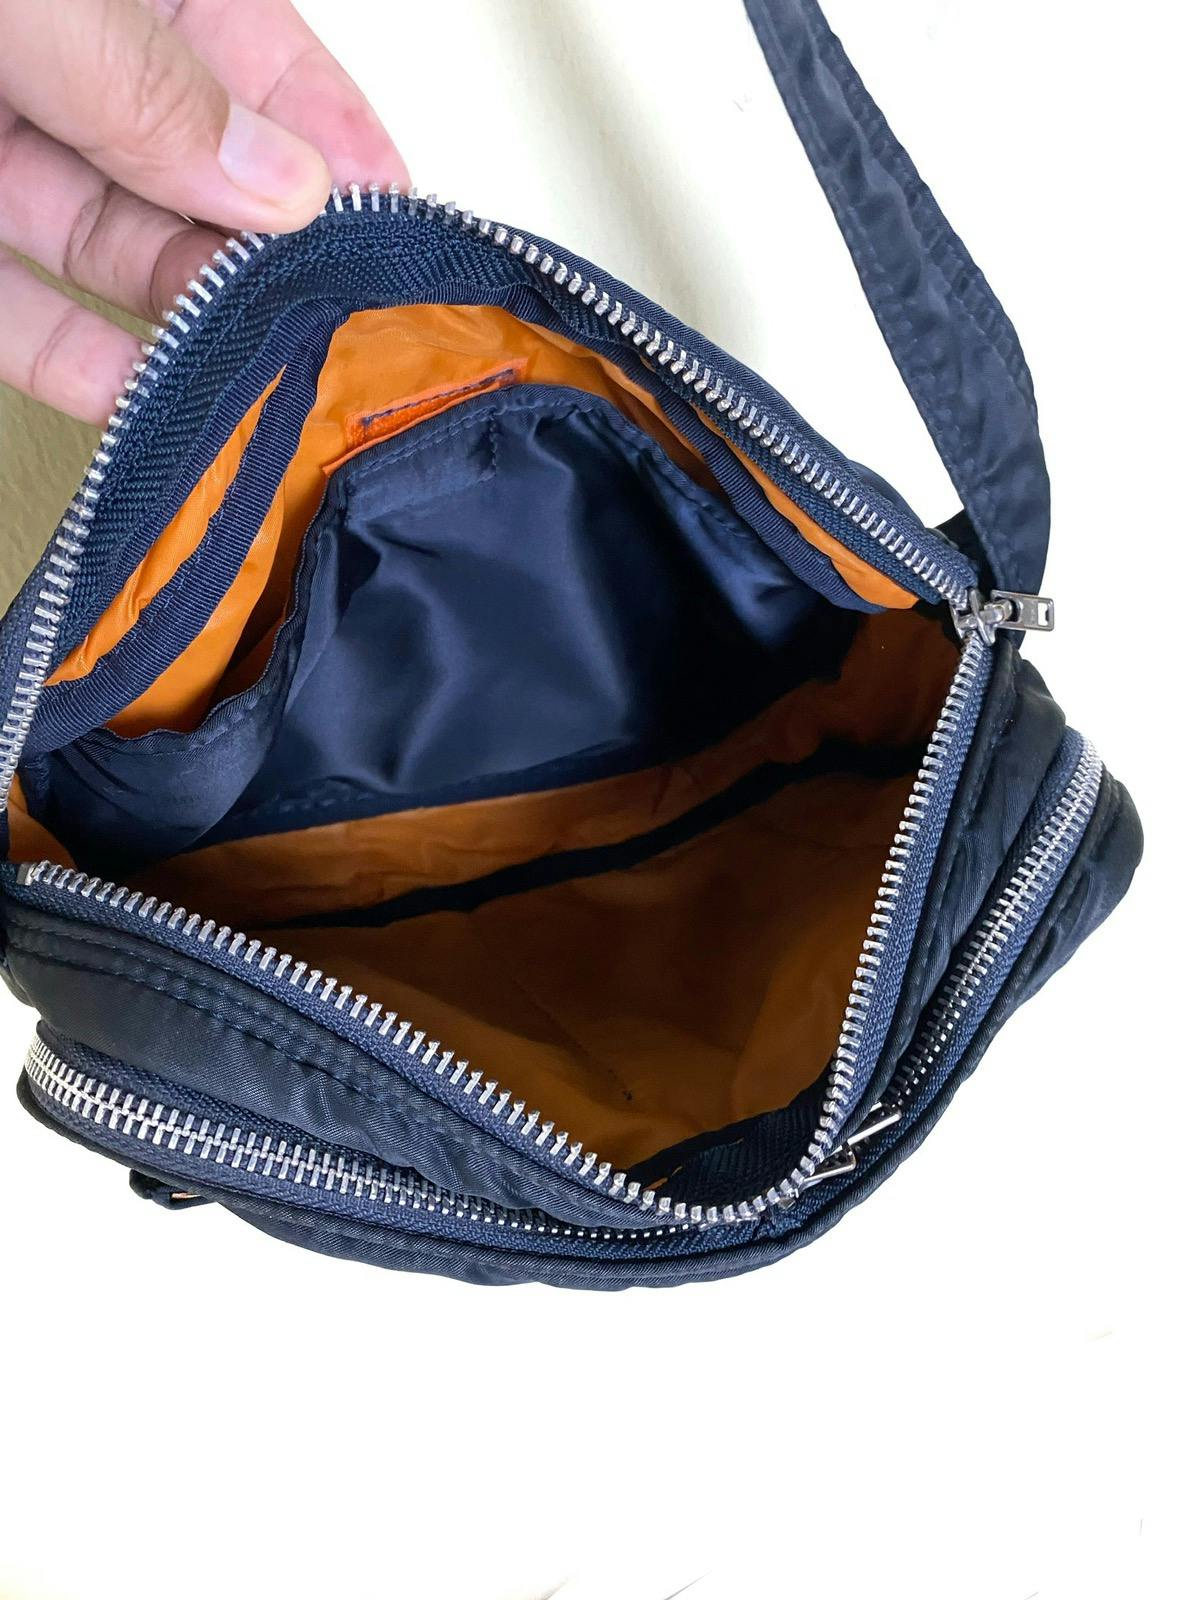 Porter Sling Bag Made in Japan - 10